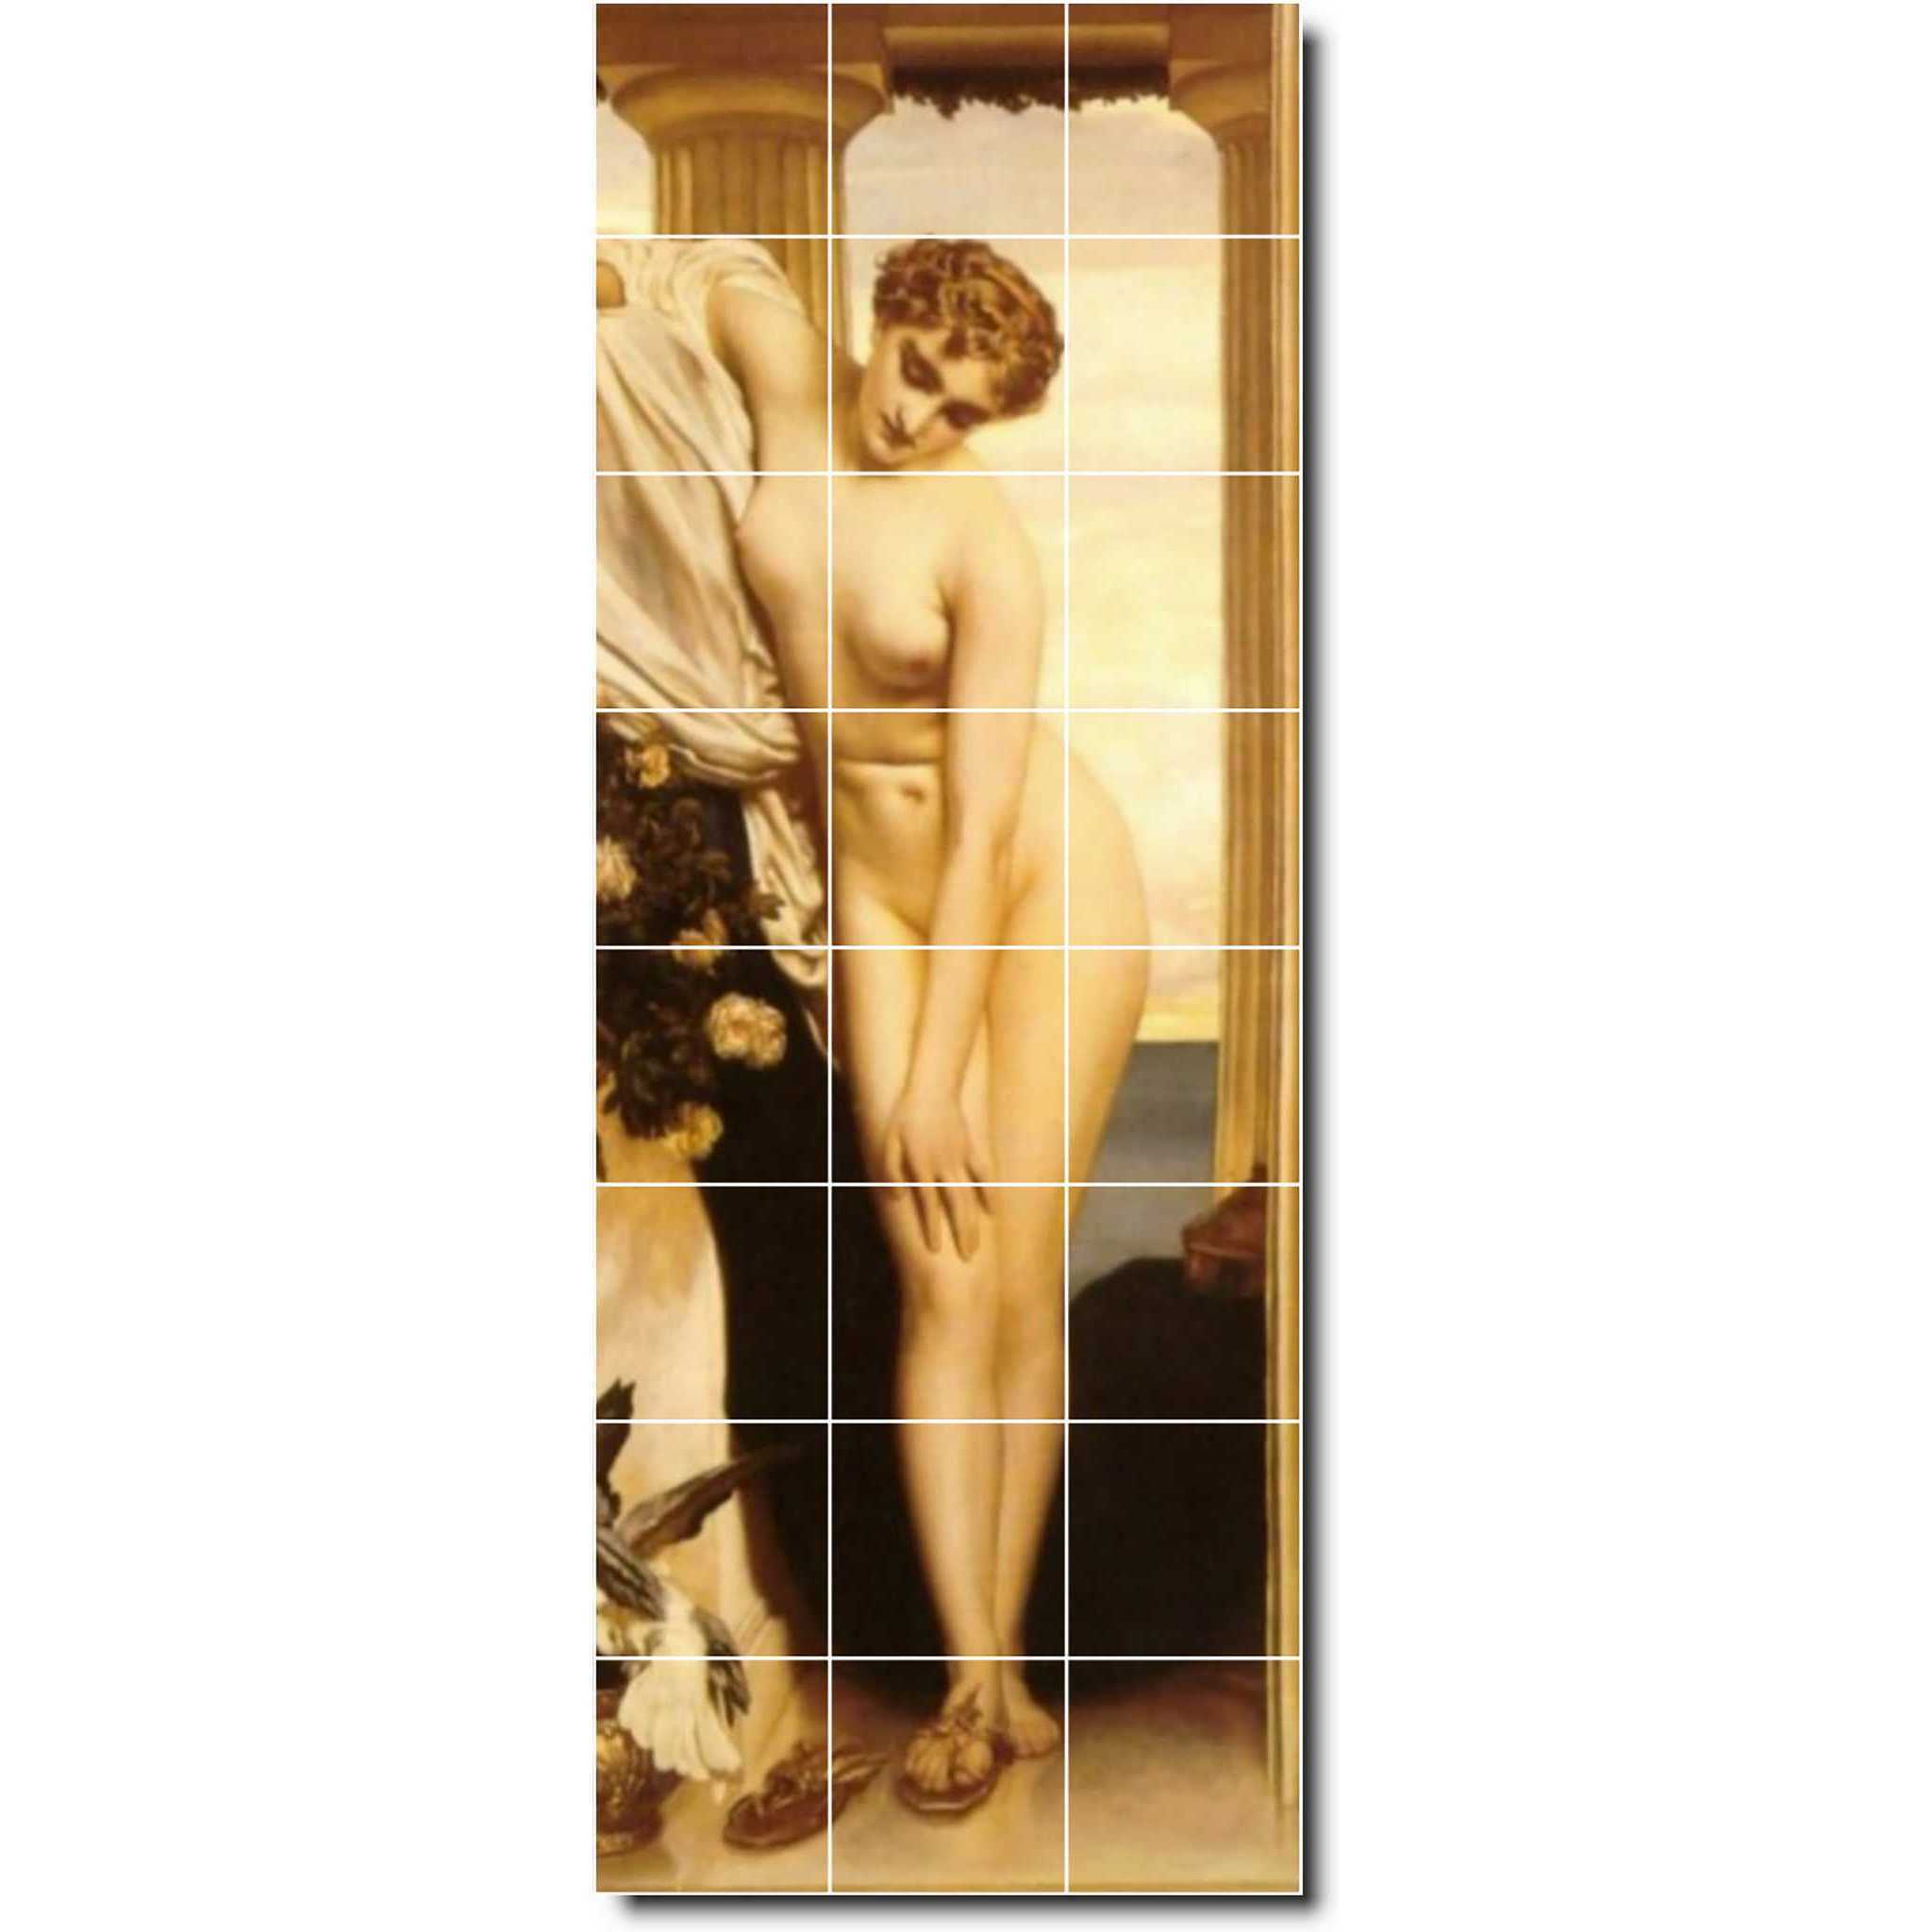 frederick leighton nude painting ceramic tile mural p05428